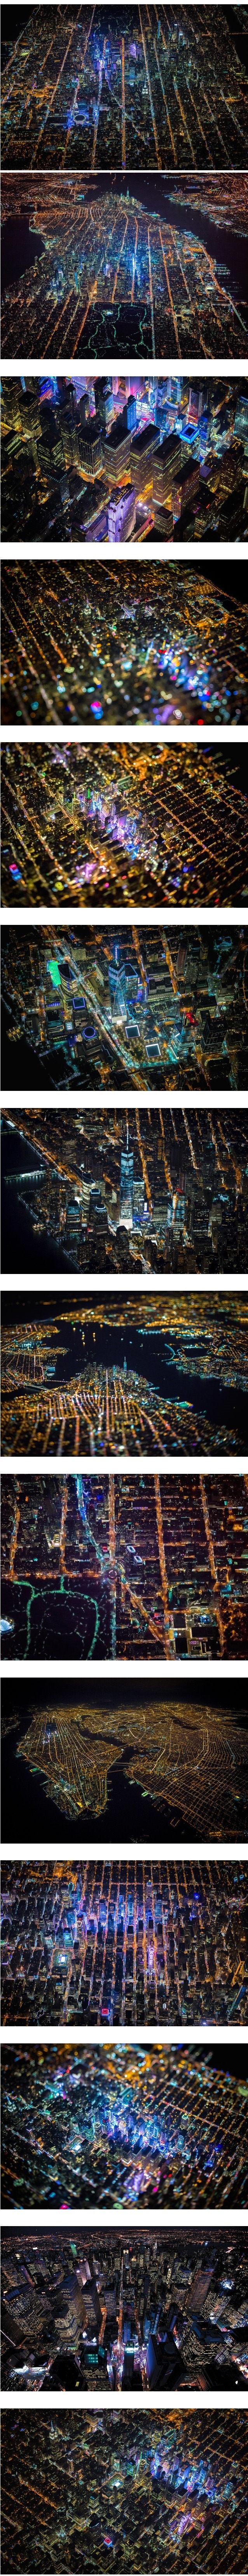 newyork_nightview.jpg